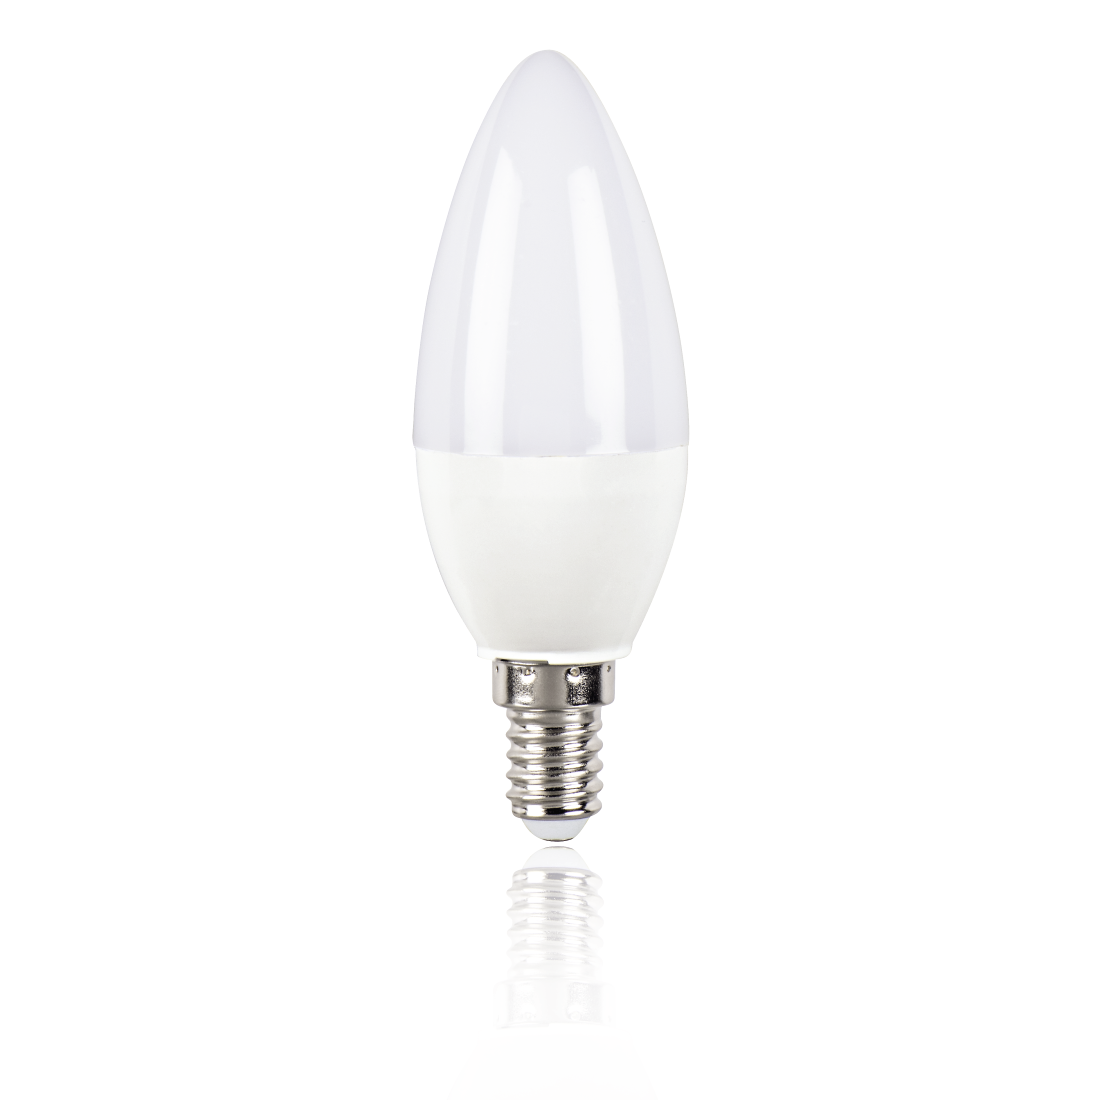 abx2 Druckfähige Abbildung 2 - Xavax, LED-Lampe, E14, 470lm ersetzt 40W, Kerzenlampe, Tageslicht